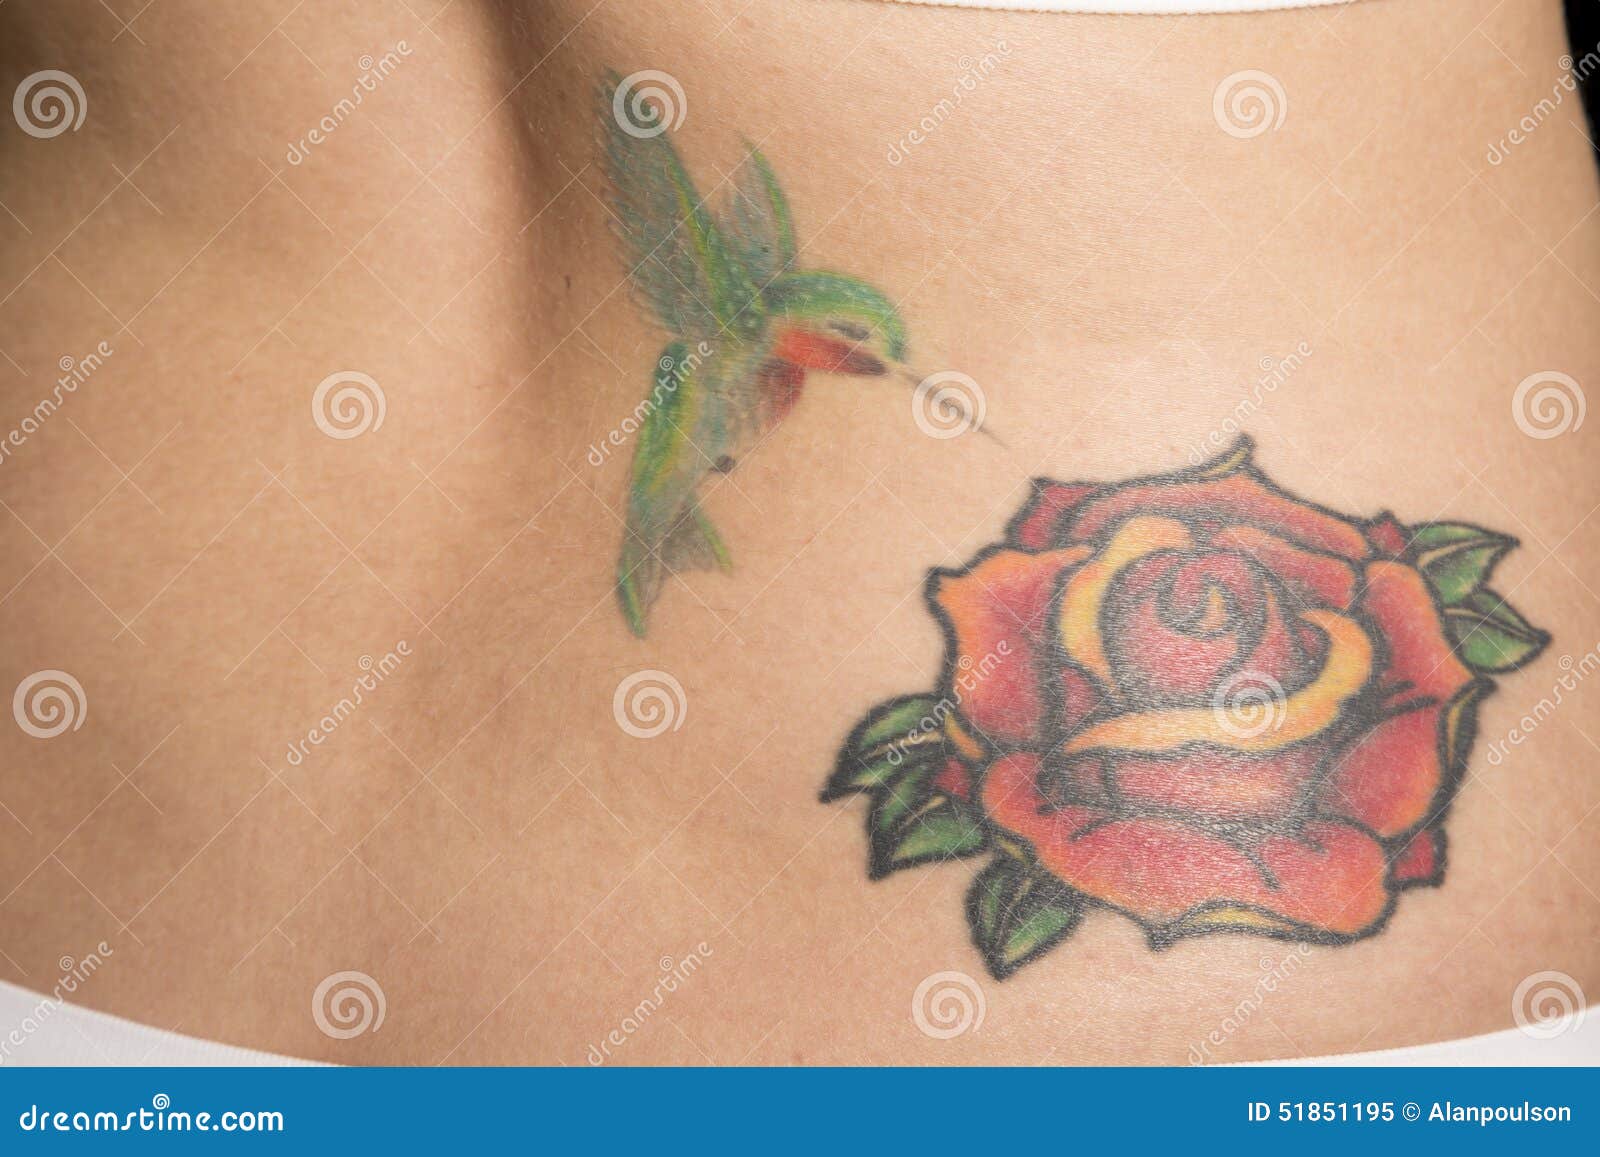 Hummingbird tattoo design by AbbieAbnormal on DeviantArt